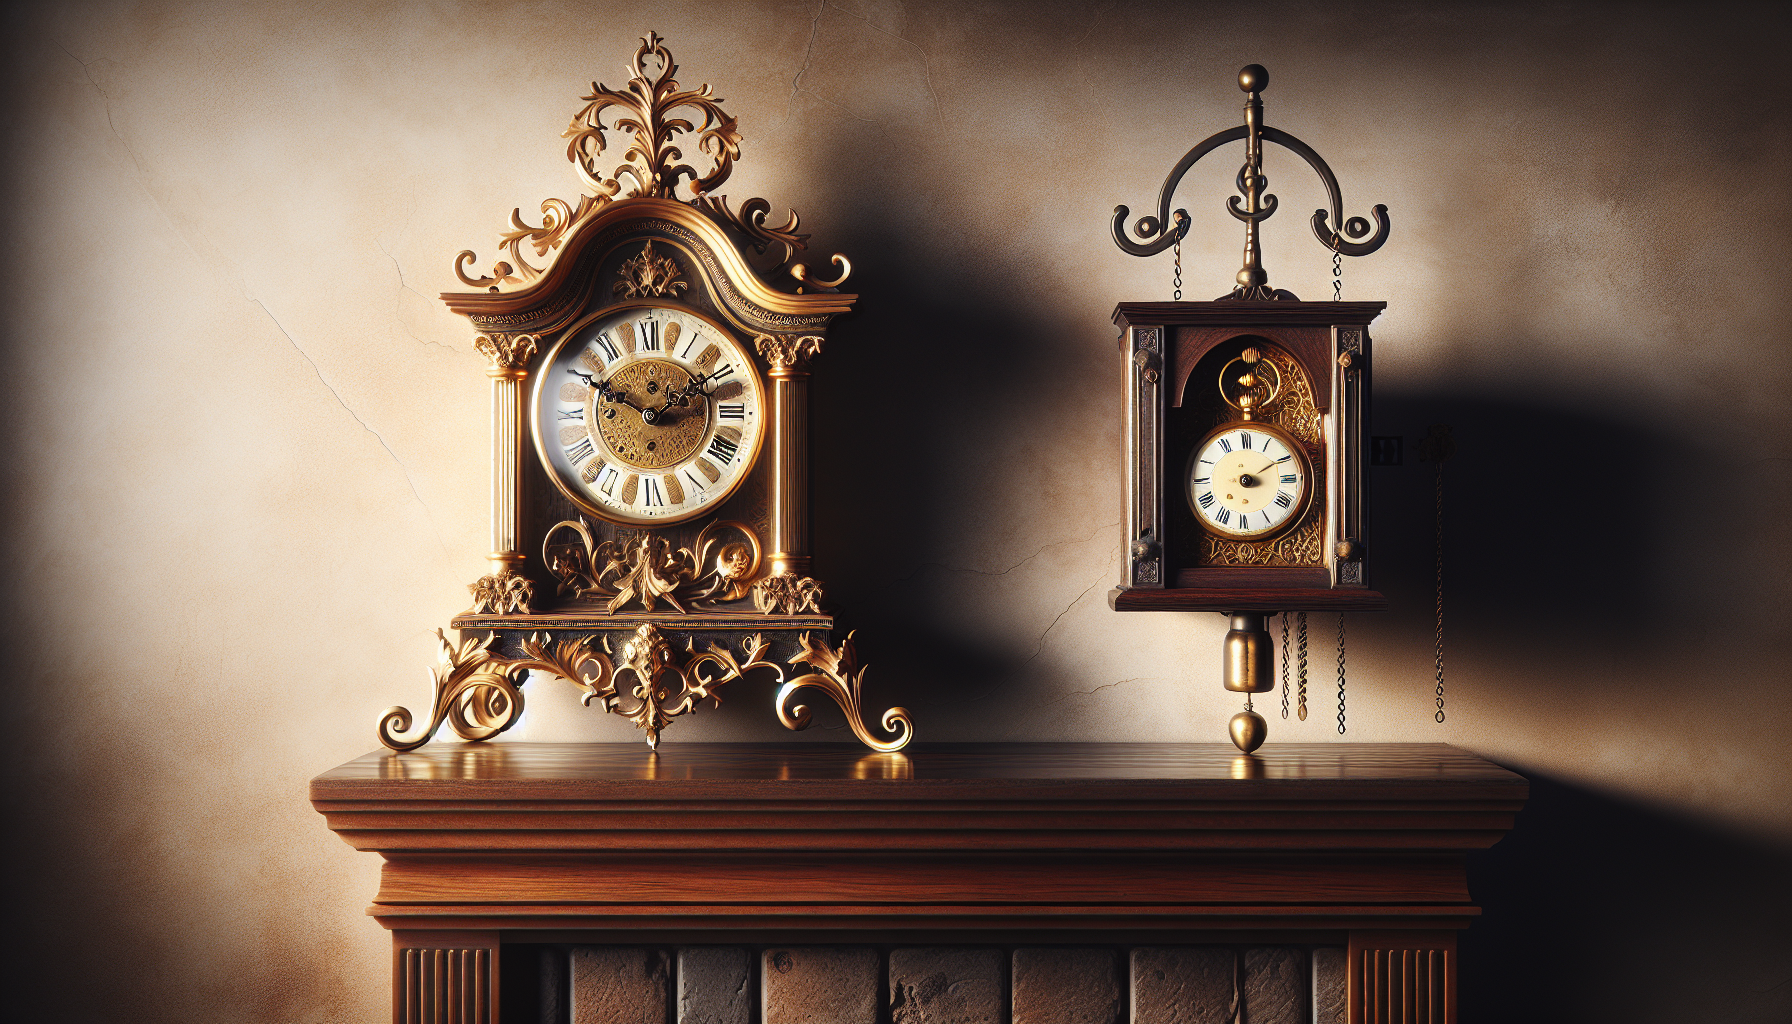 Comparison between mantel and bracket clocks